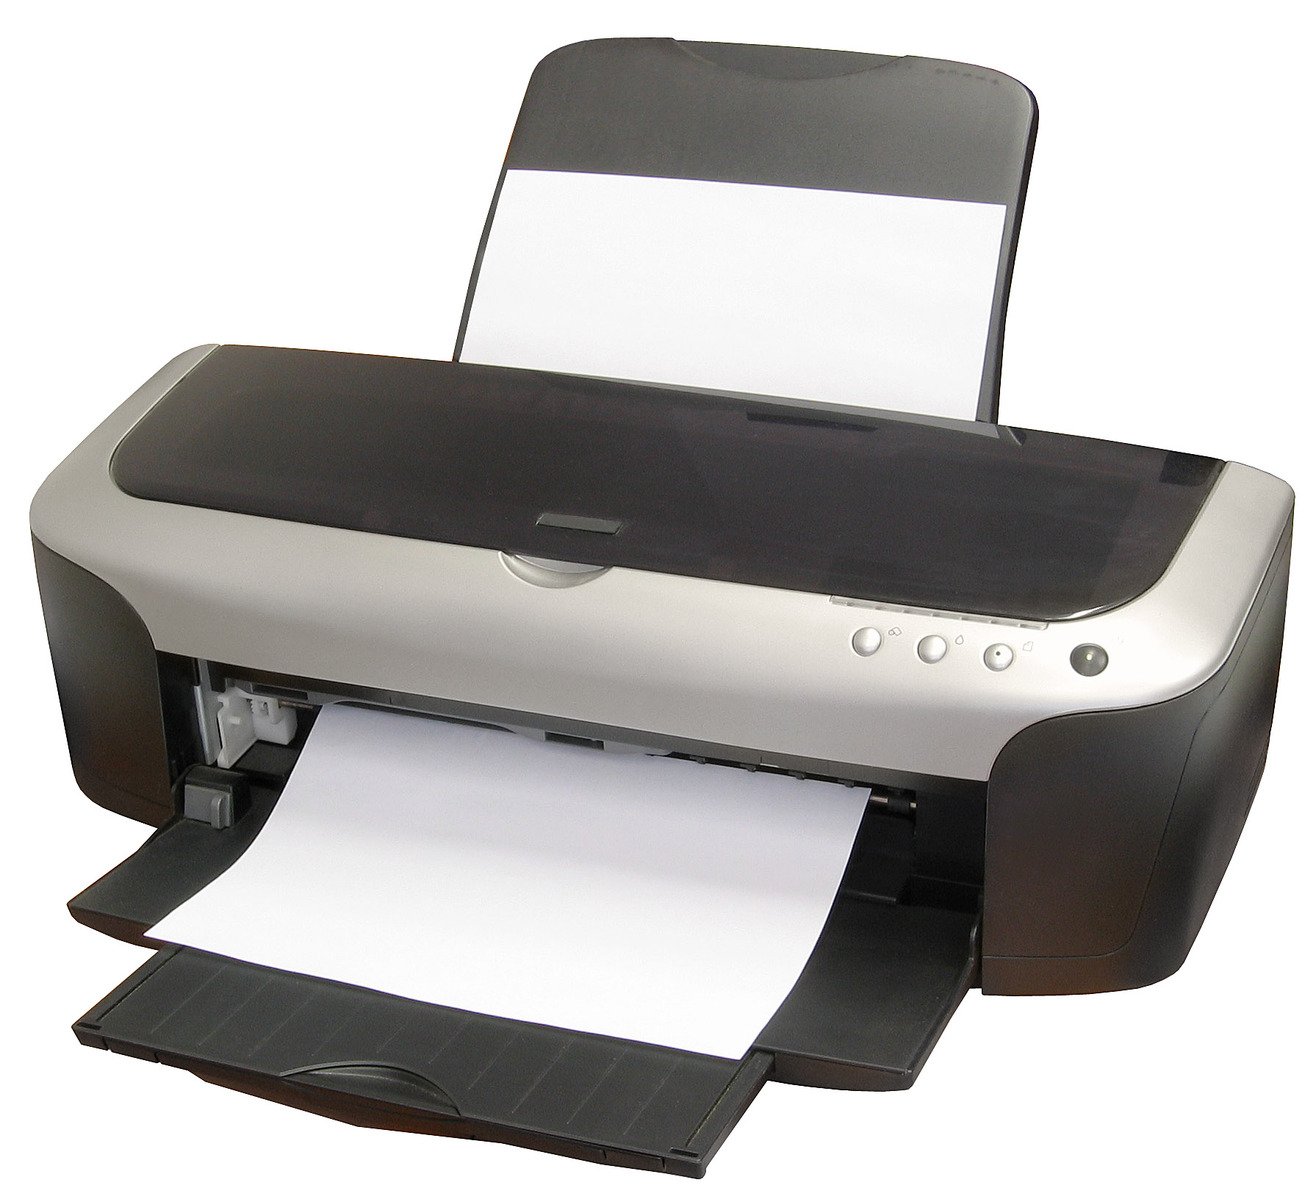 Printer-Ink